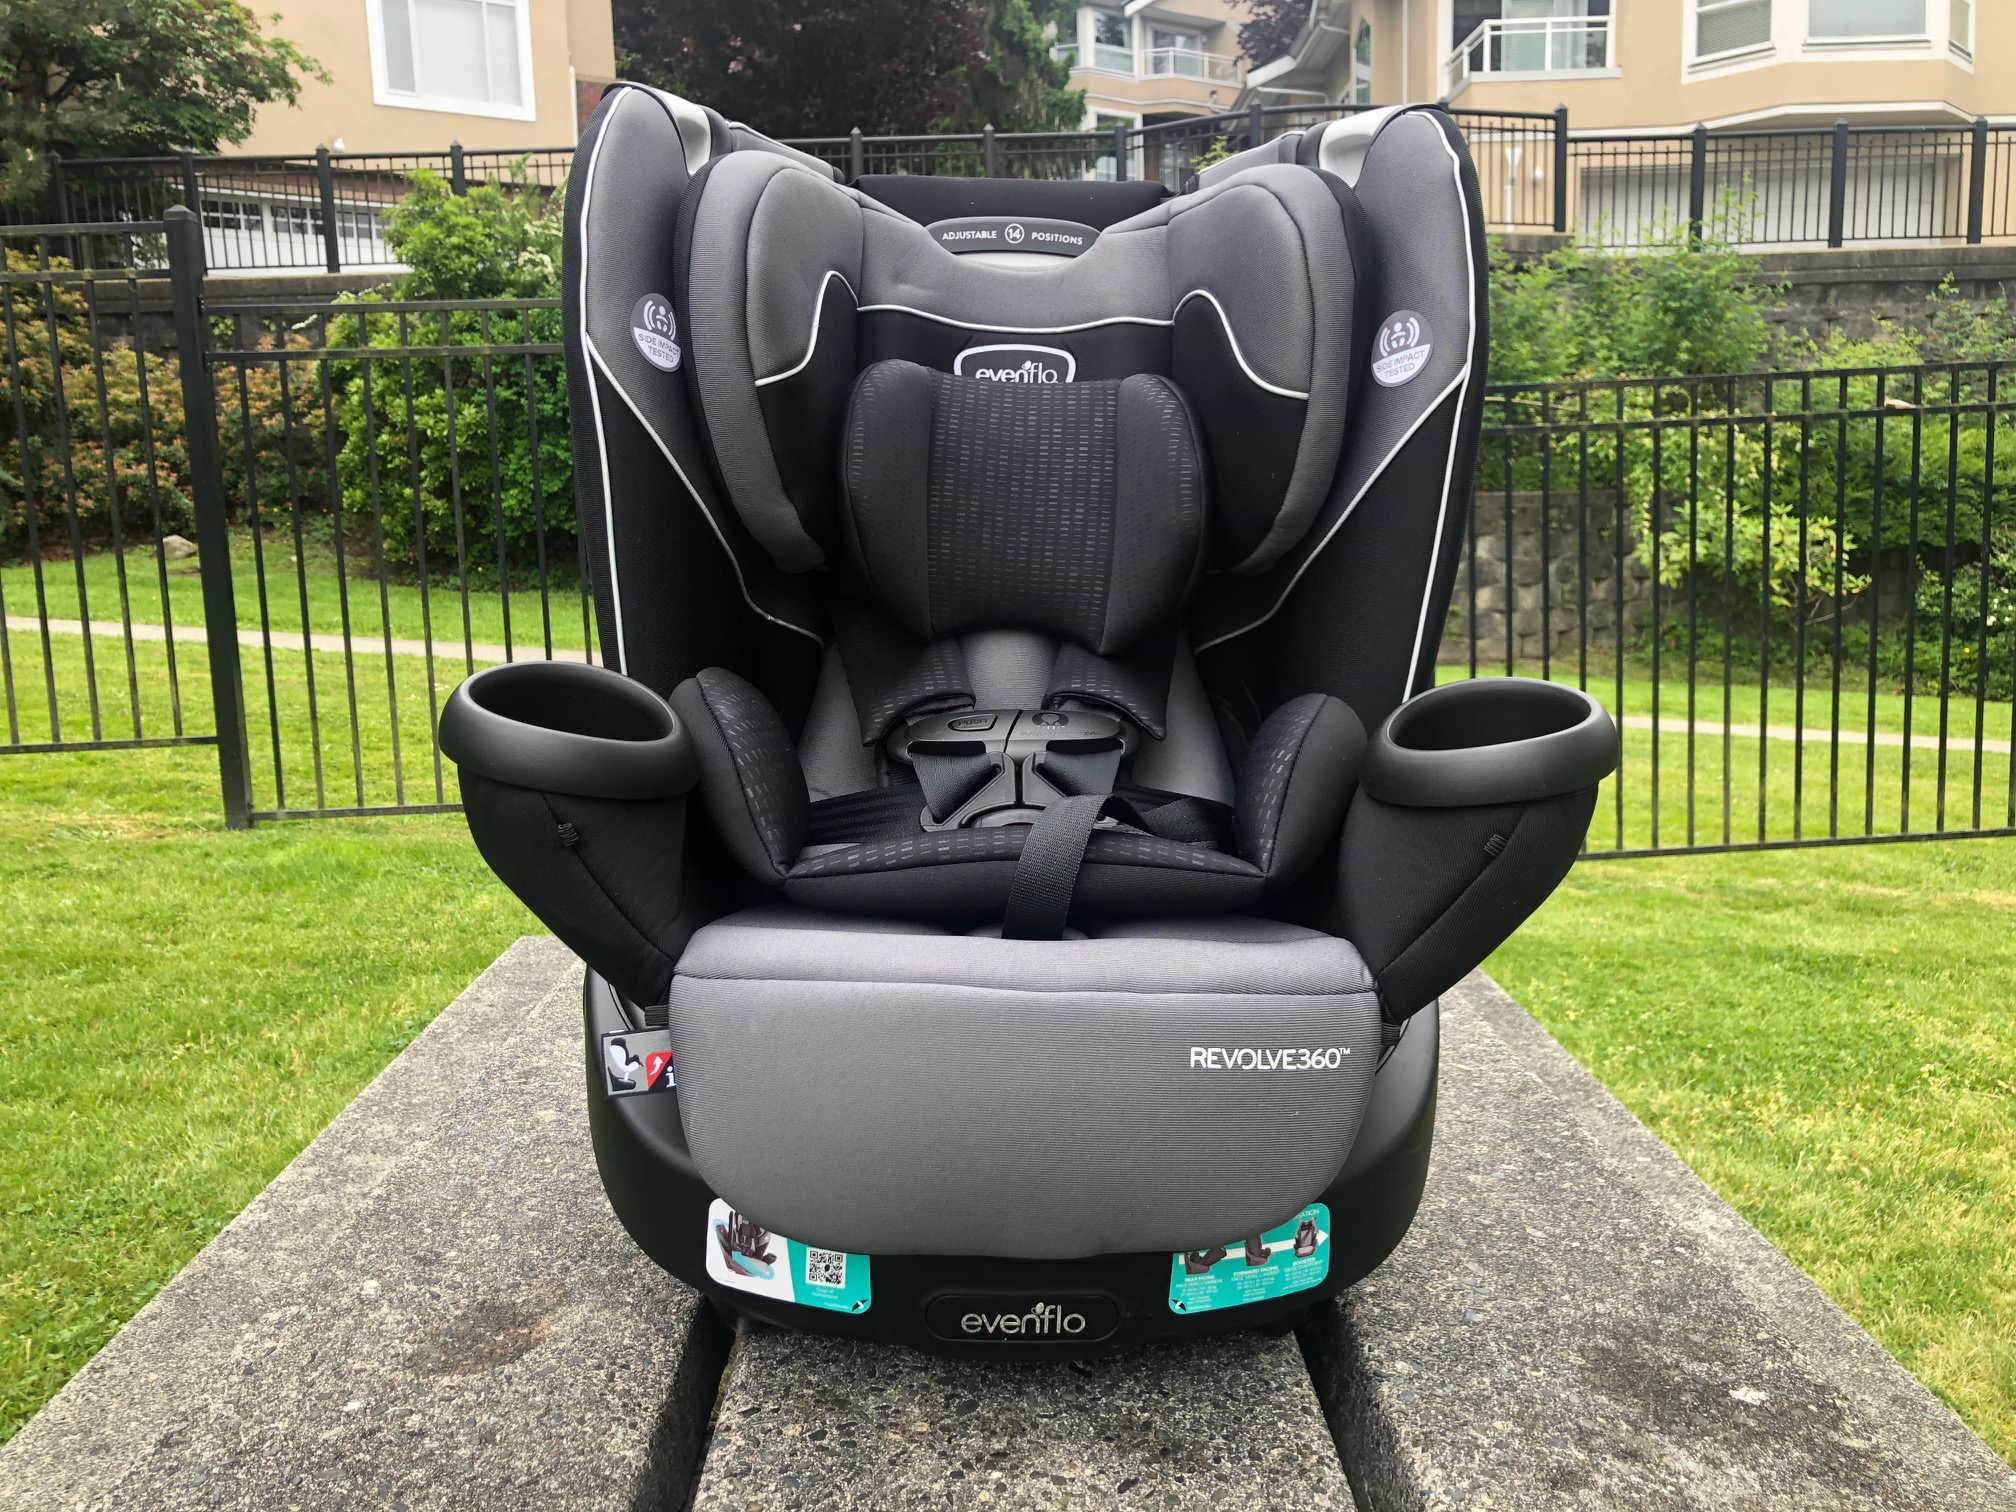 Evenflo Revolve 360 allinone car seat review Best Buy Blog